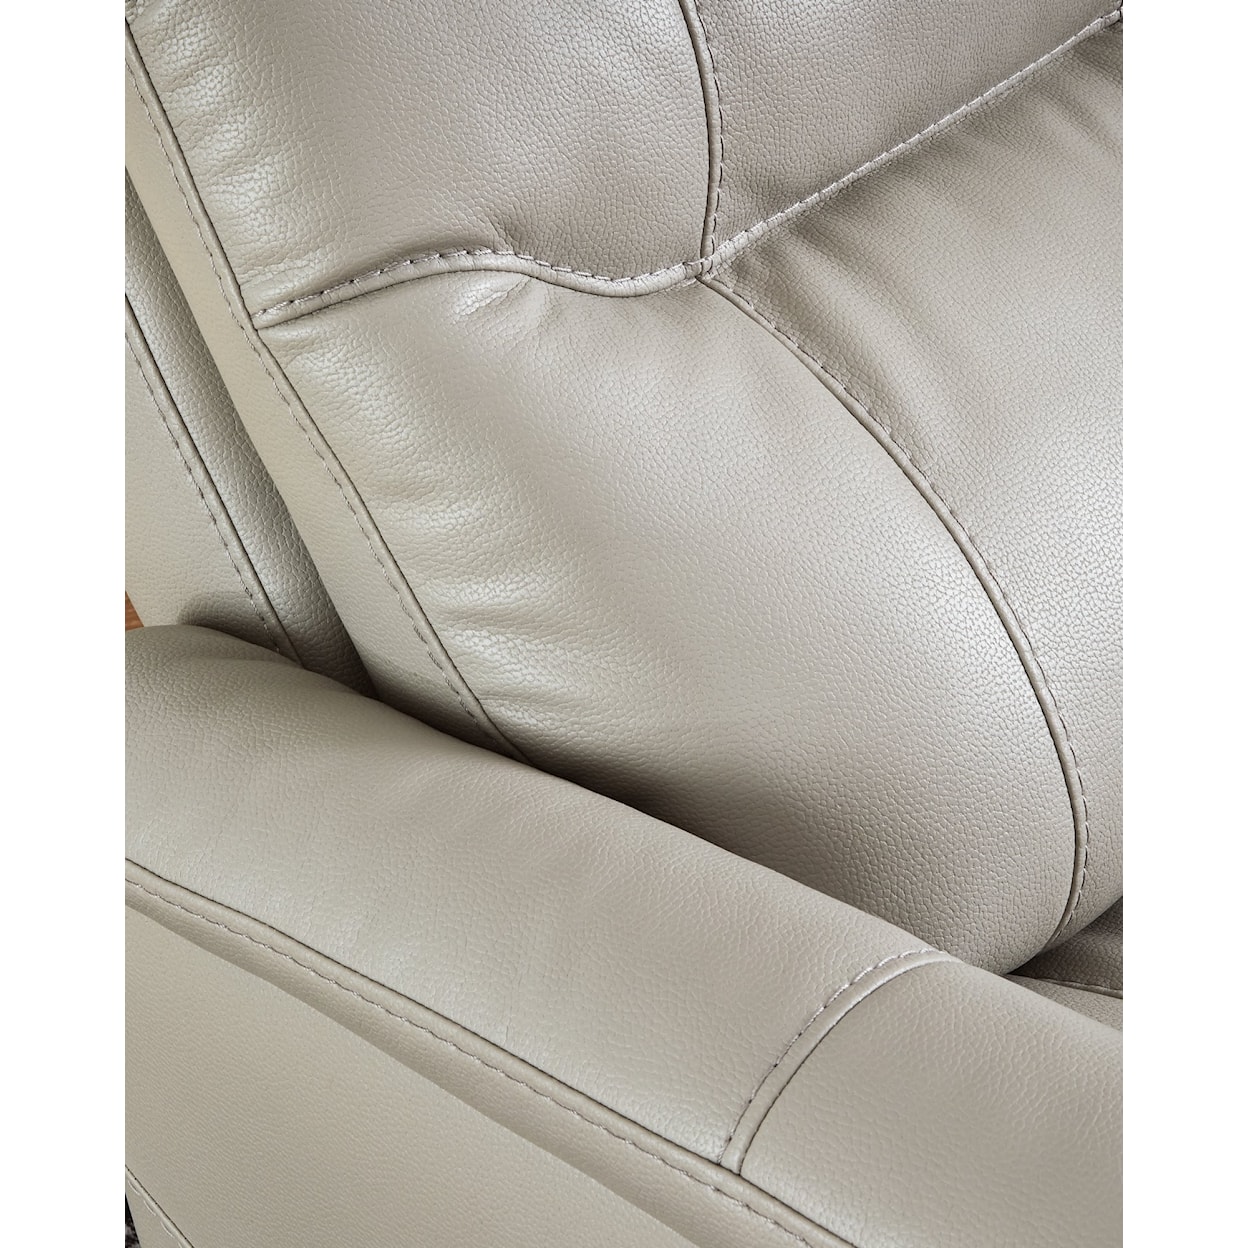 Ashley Furniture Signature Design Riptyme Swivel Glider Recliner